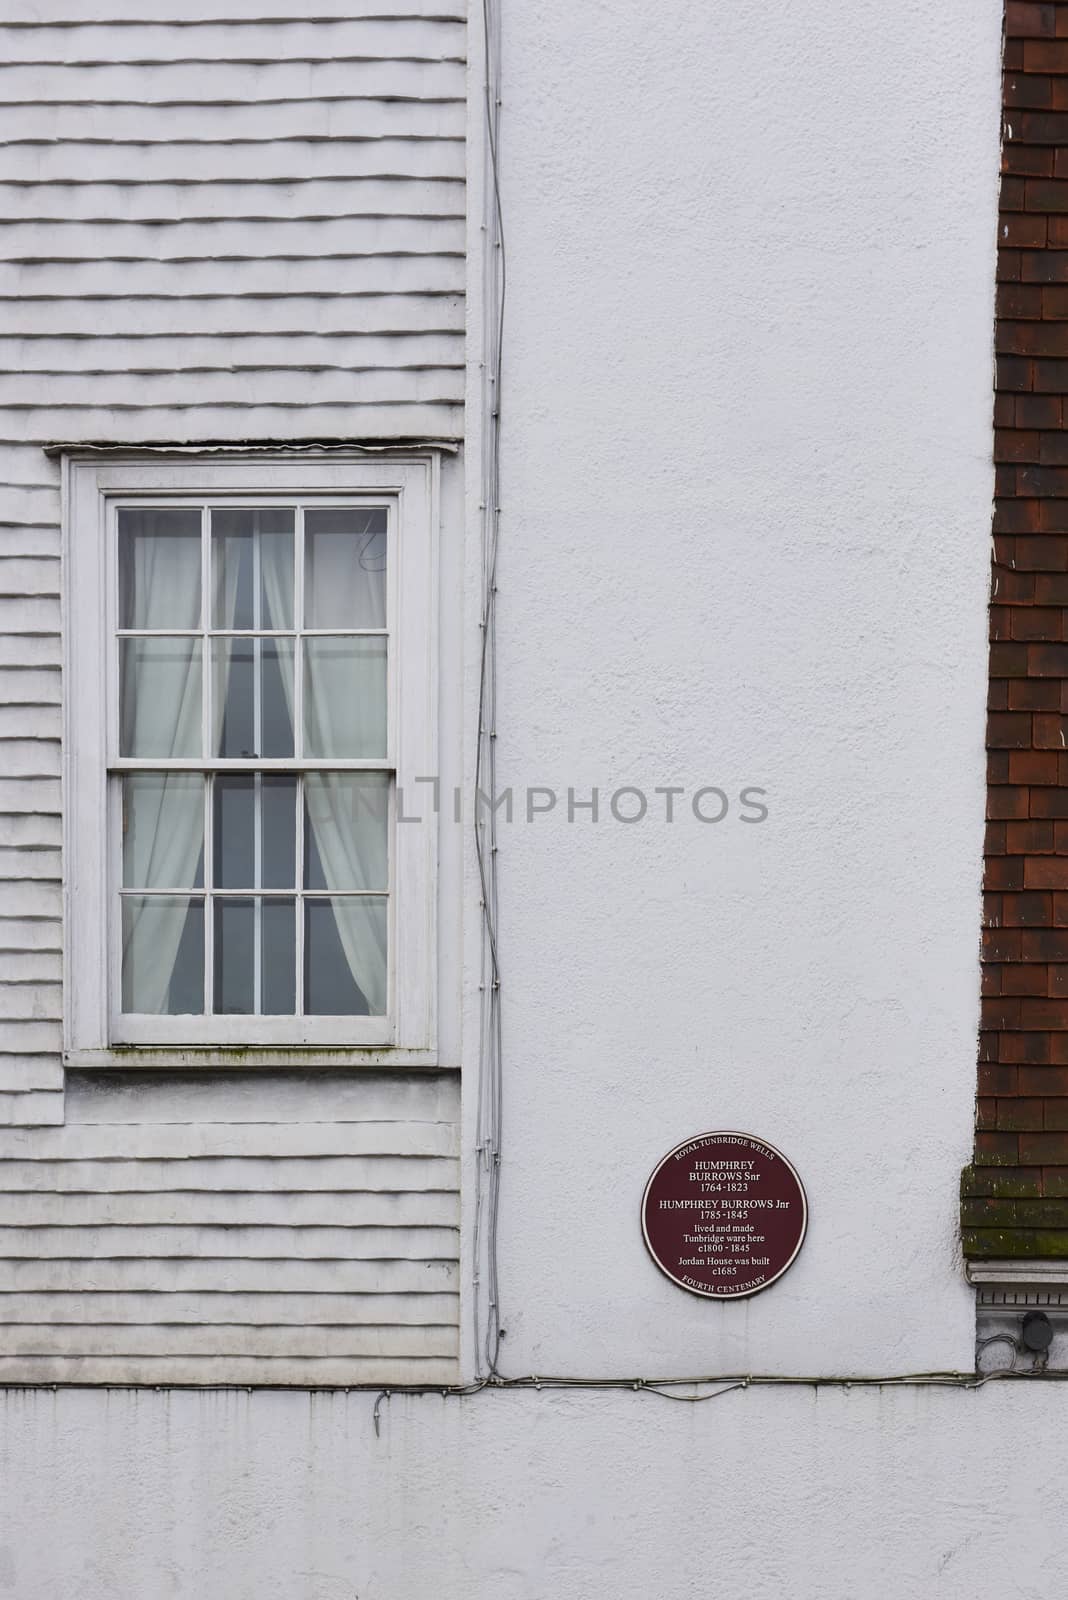 TUNBRIDGE WELLS, UK - JANUARY 26: Plaque outside house where Humphrey Borrows Snr and, later, Humphrey Borrows Jnr lived and manufactured Tunbridge ware. January 26, 2016 in Tunbridge Wells.
